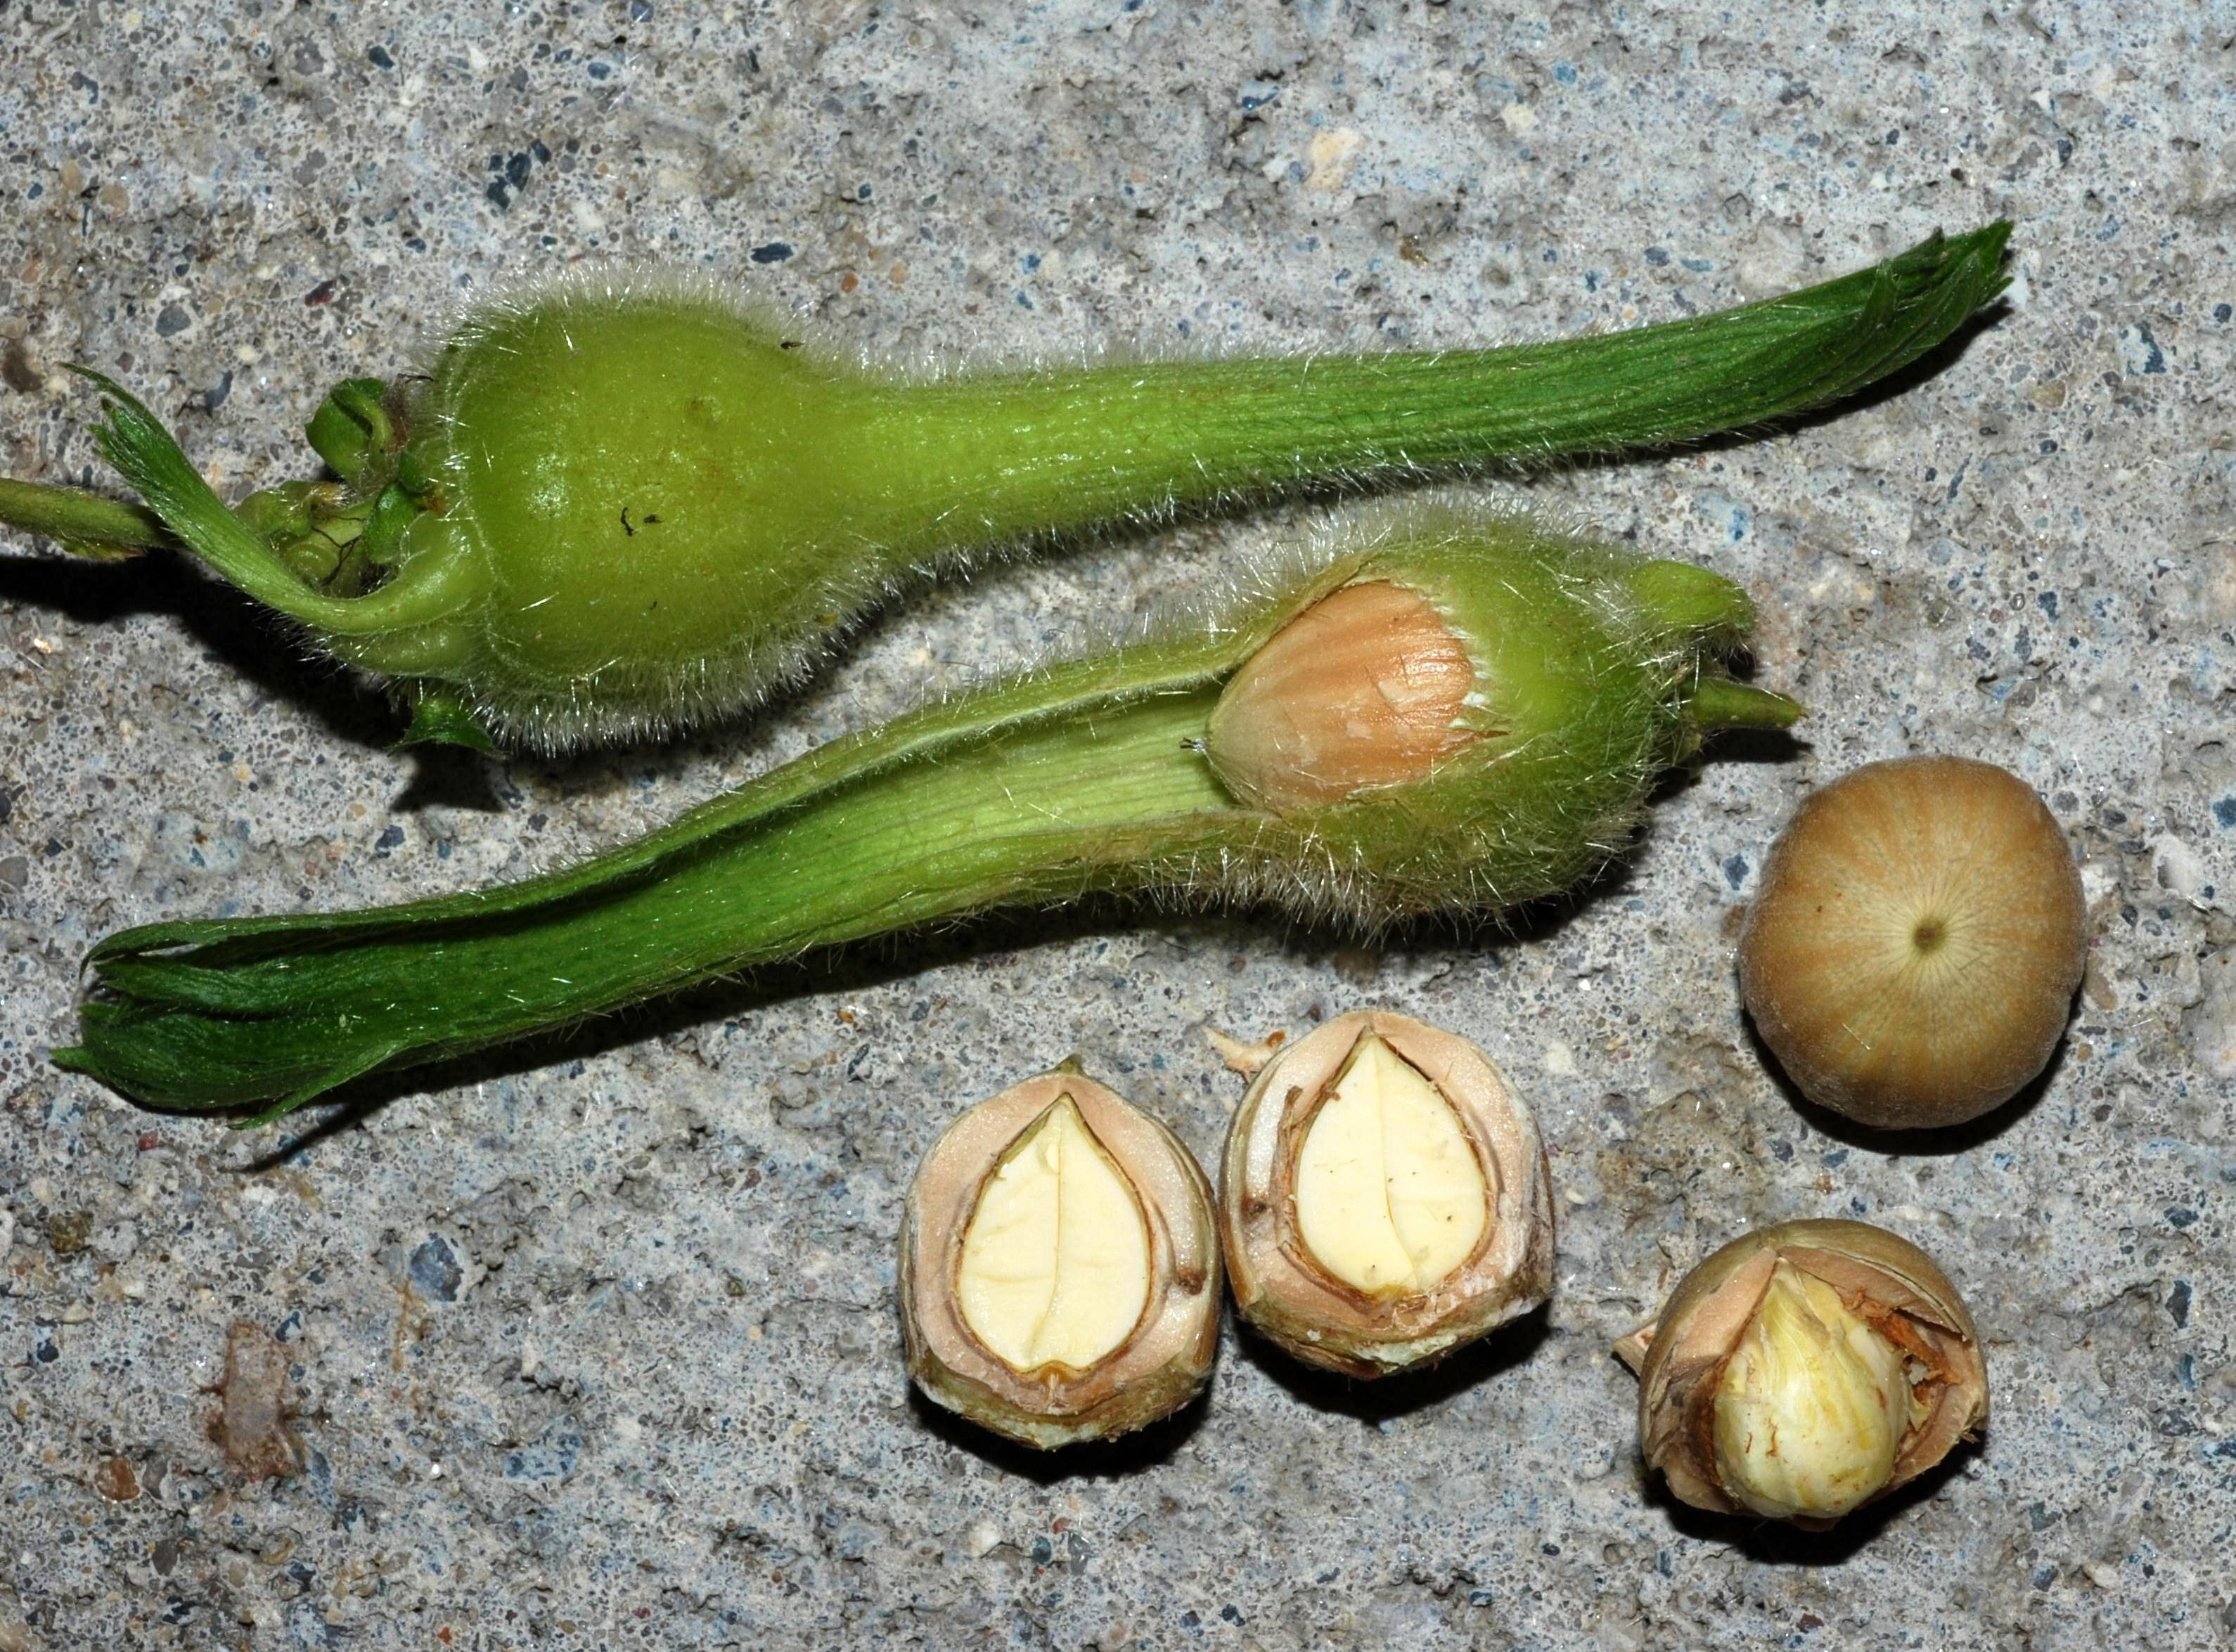 C. cornuta - fruits/seeds